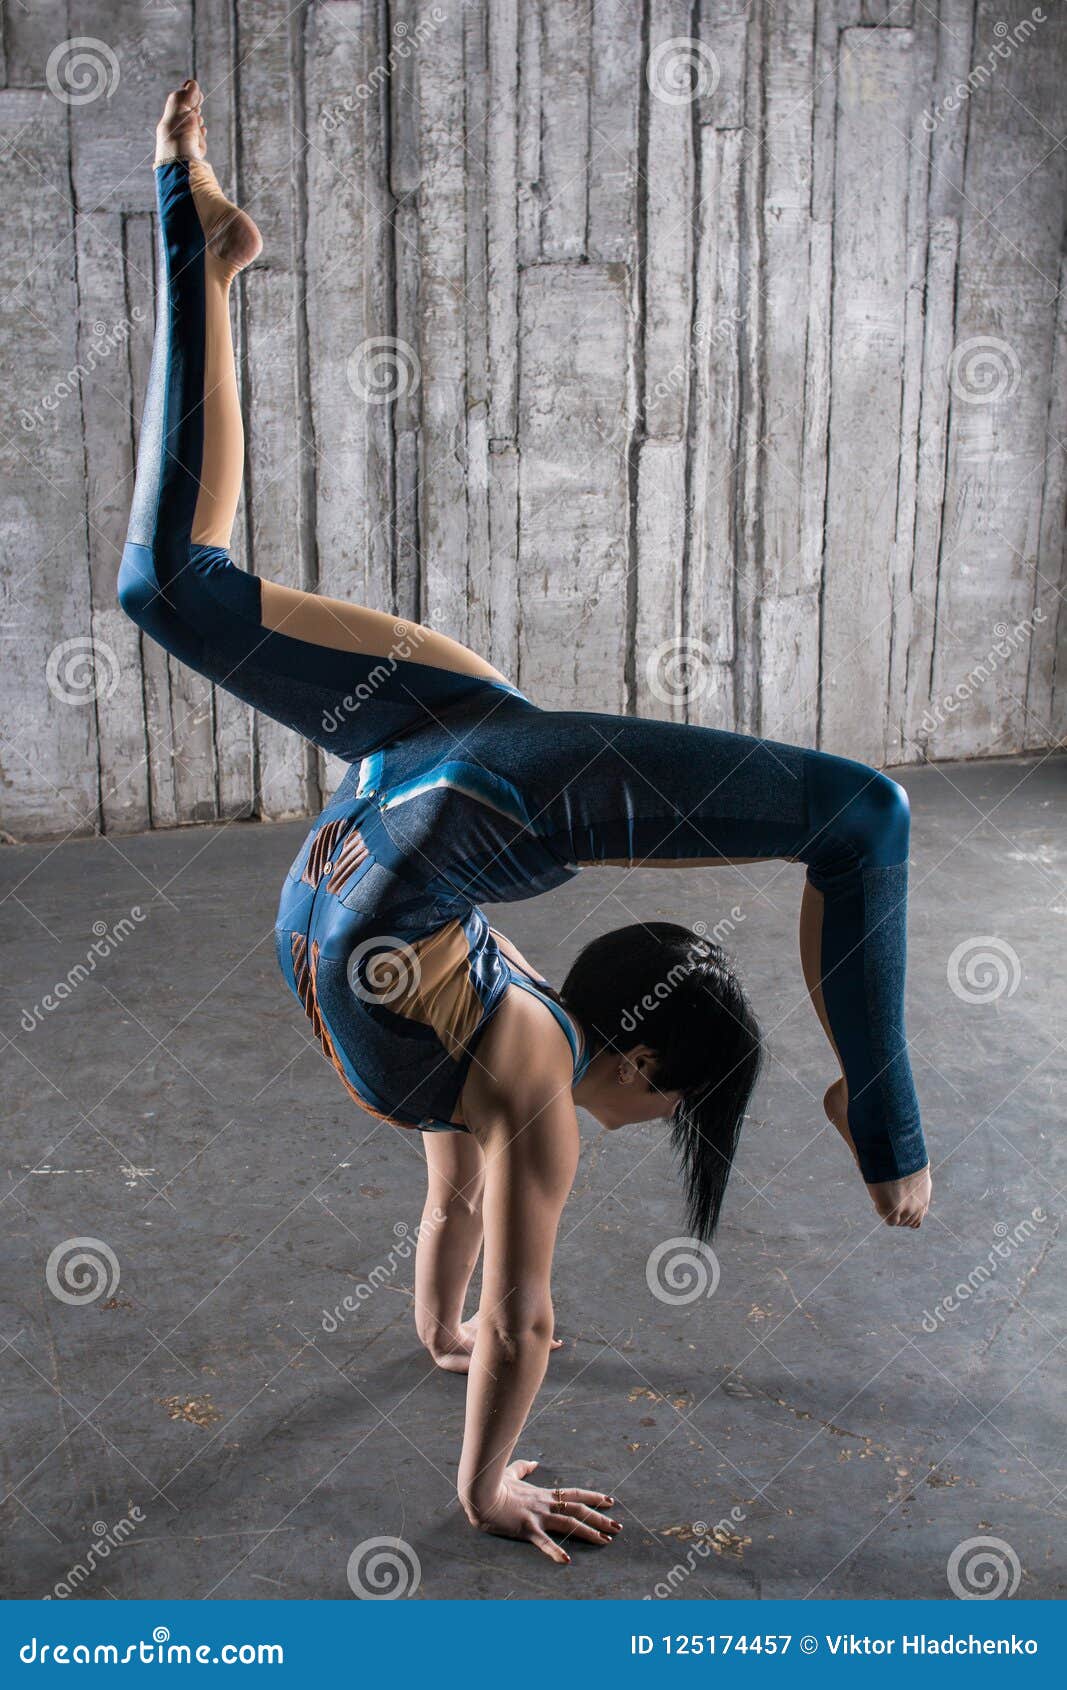 Circus Gymnast Woman Flexible Body Standing On Arms Upside Down Balancing Balls On Feet